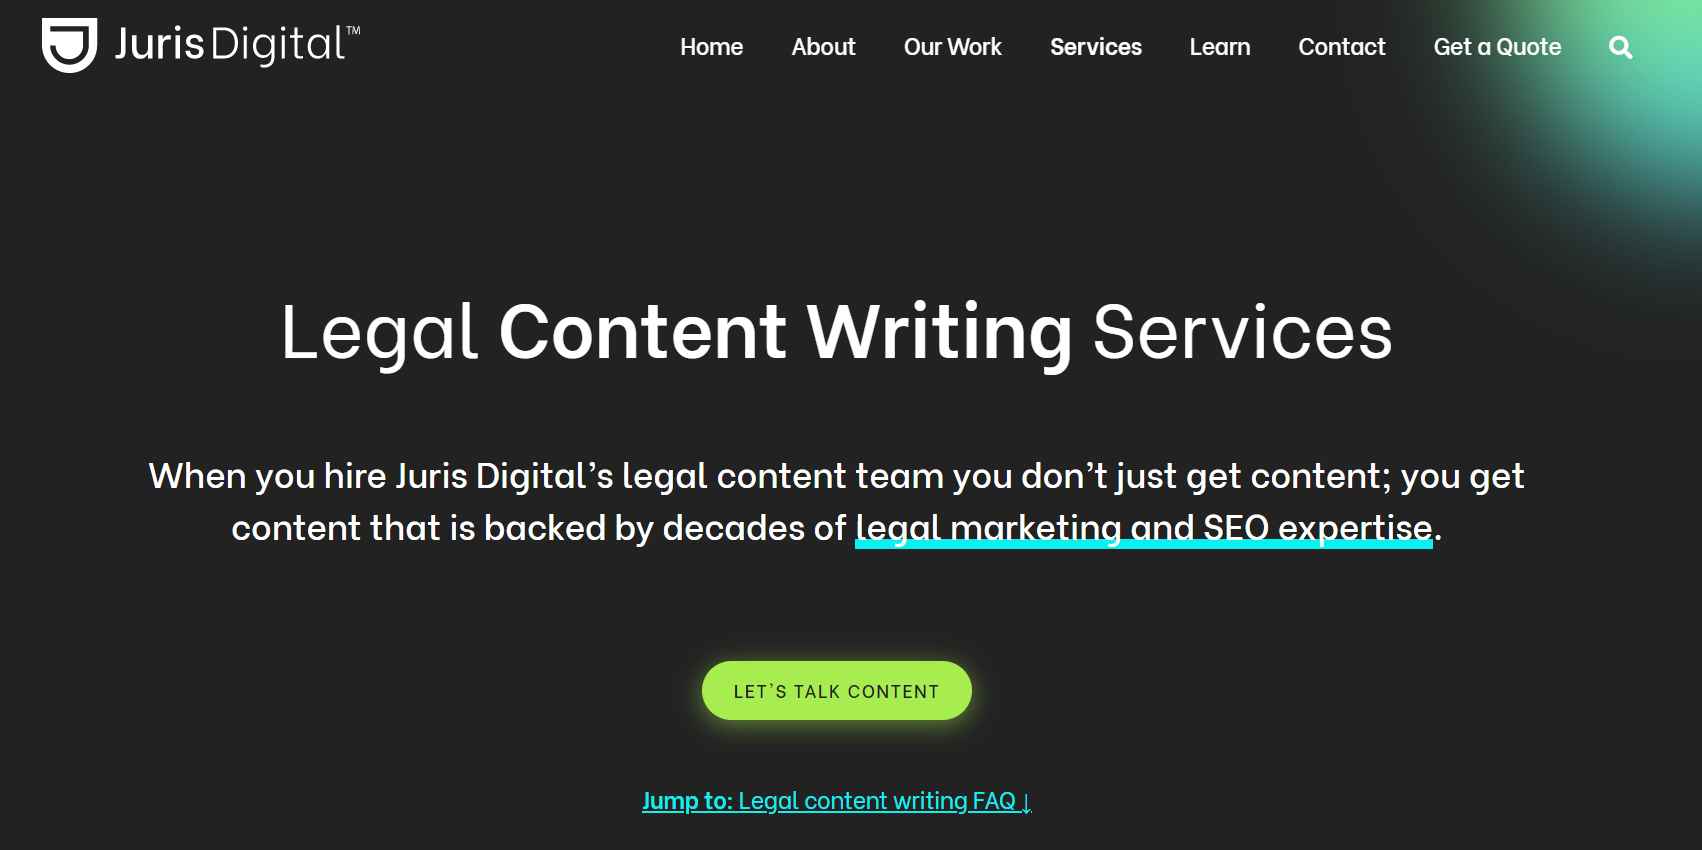 Top content writing services - Juris Digital